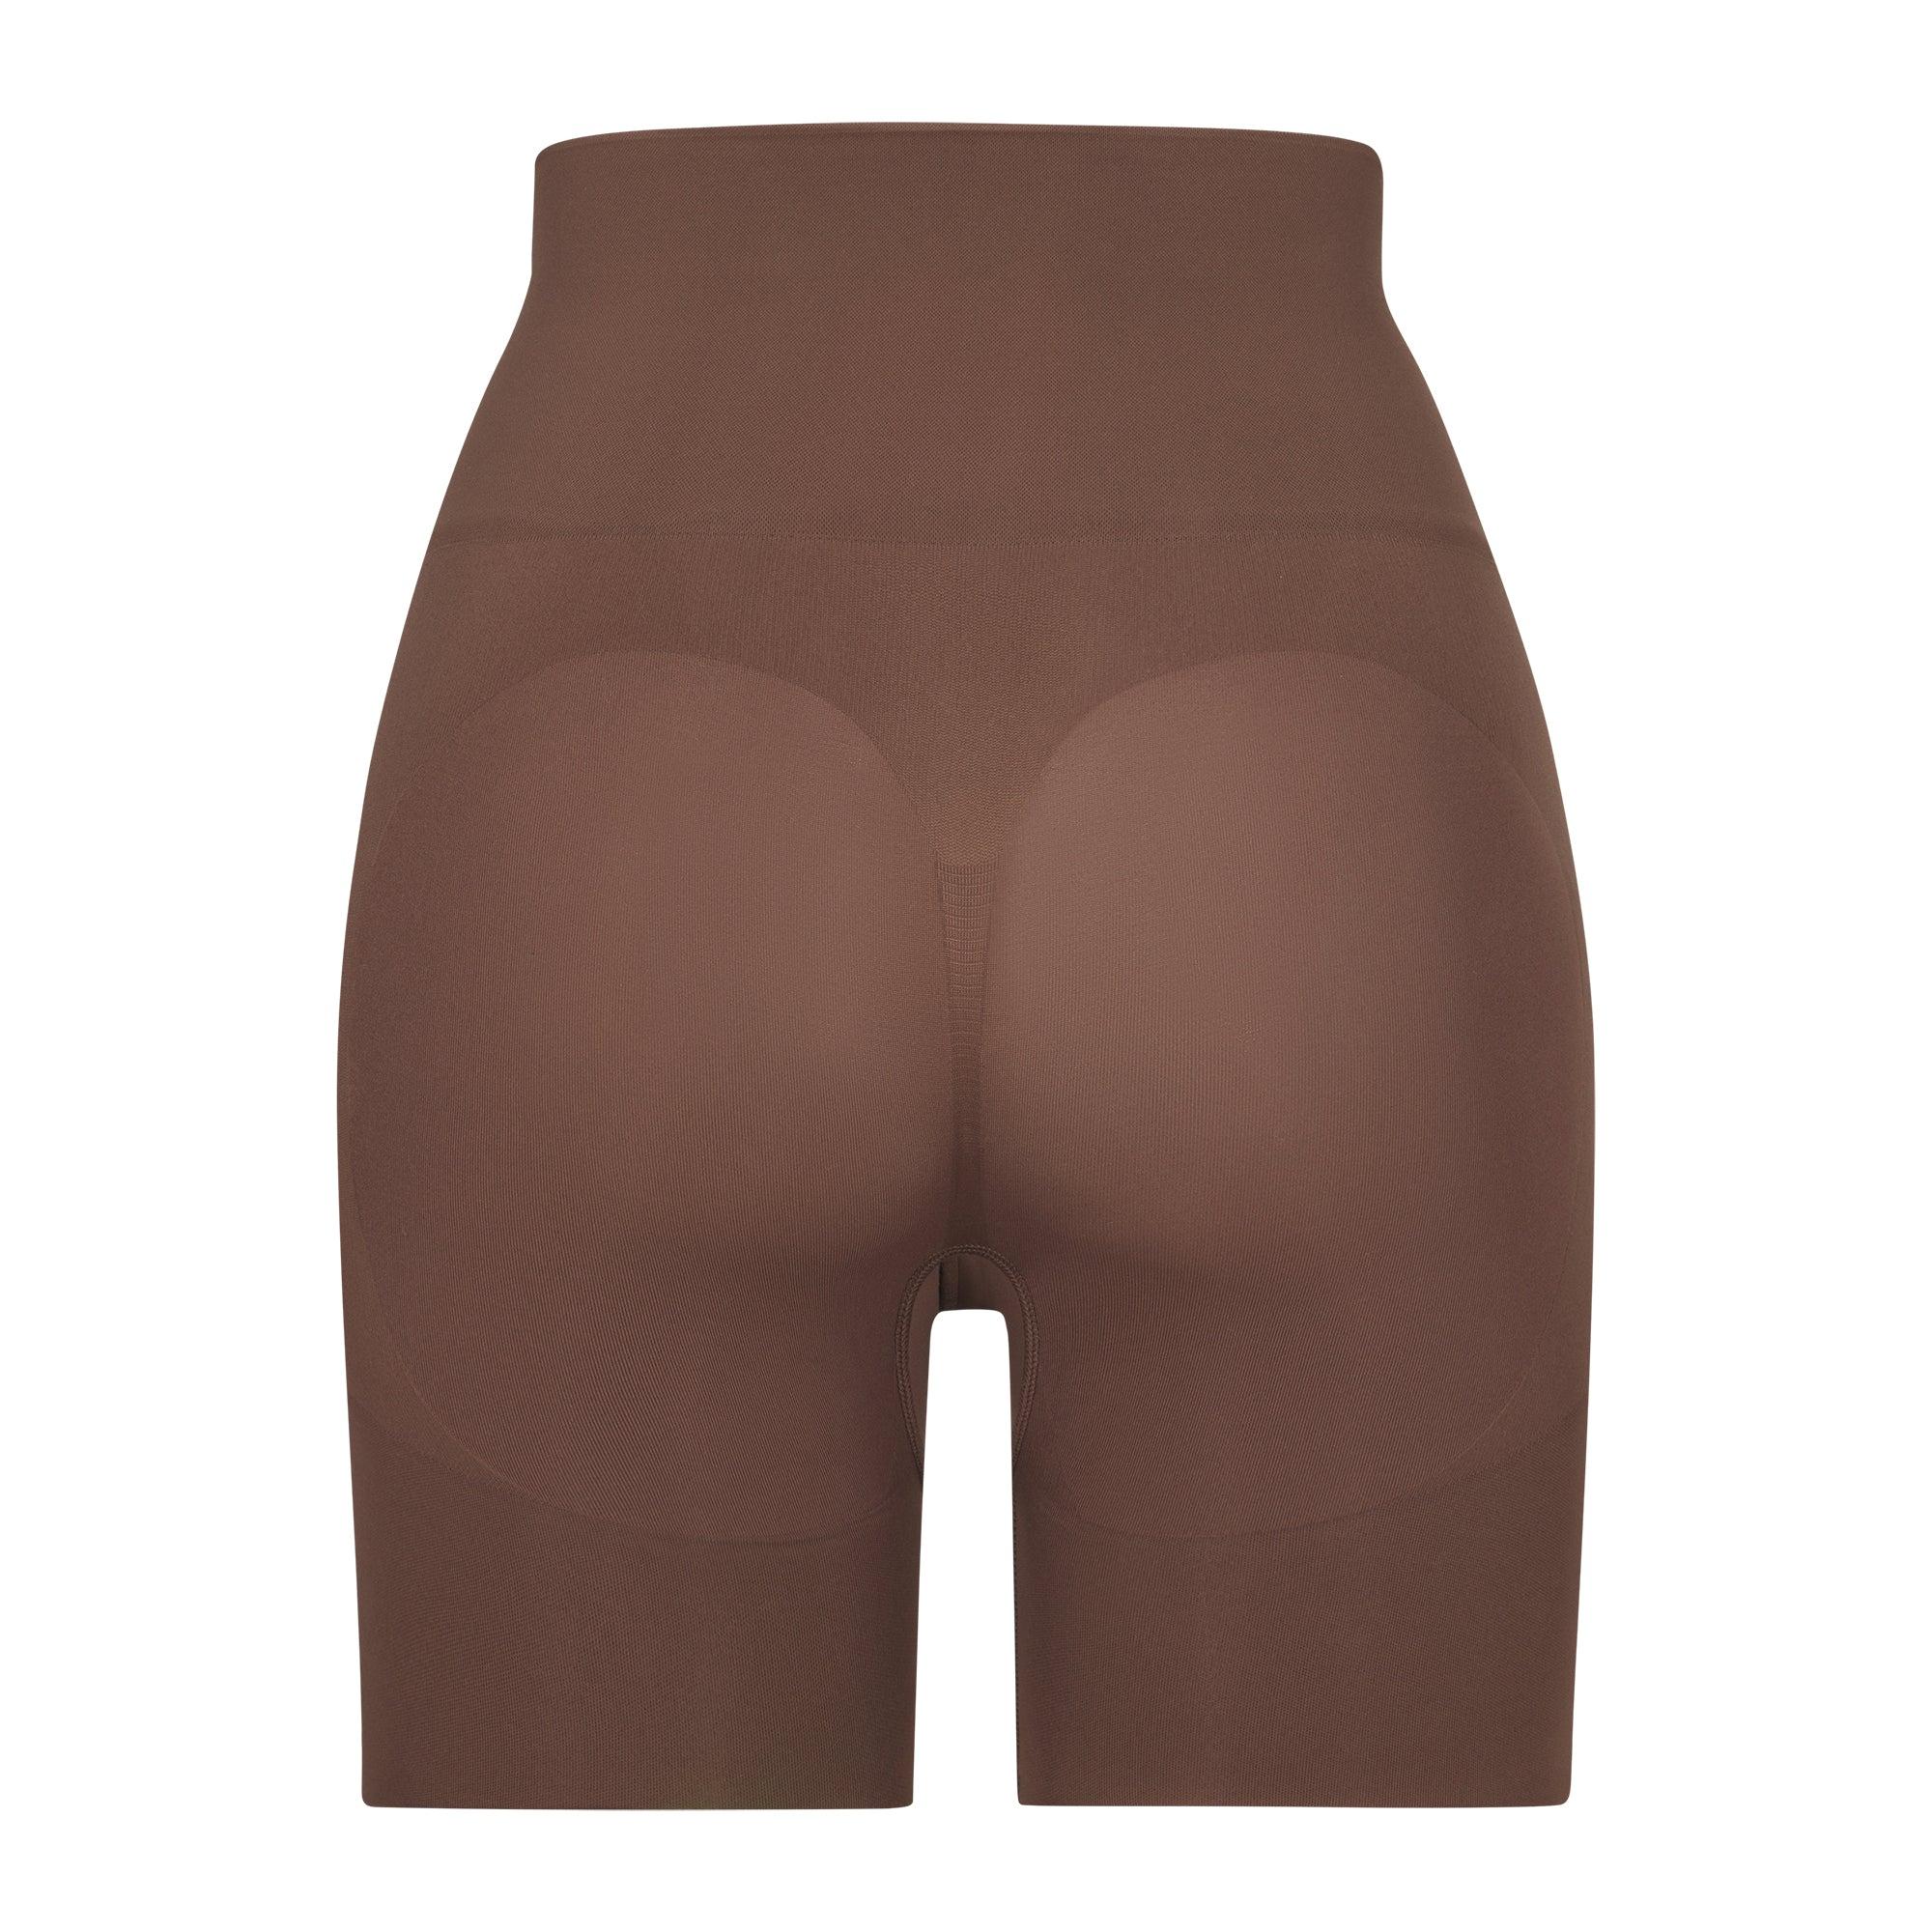 Skims Butt Enhancing Short in Brown